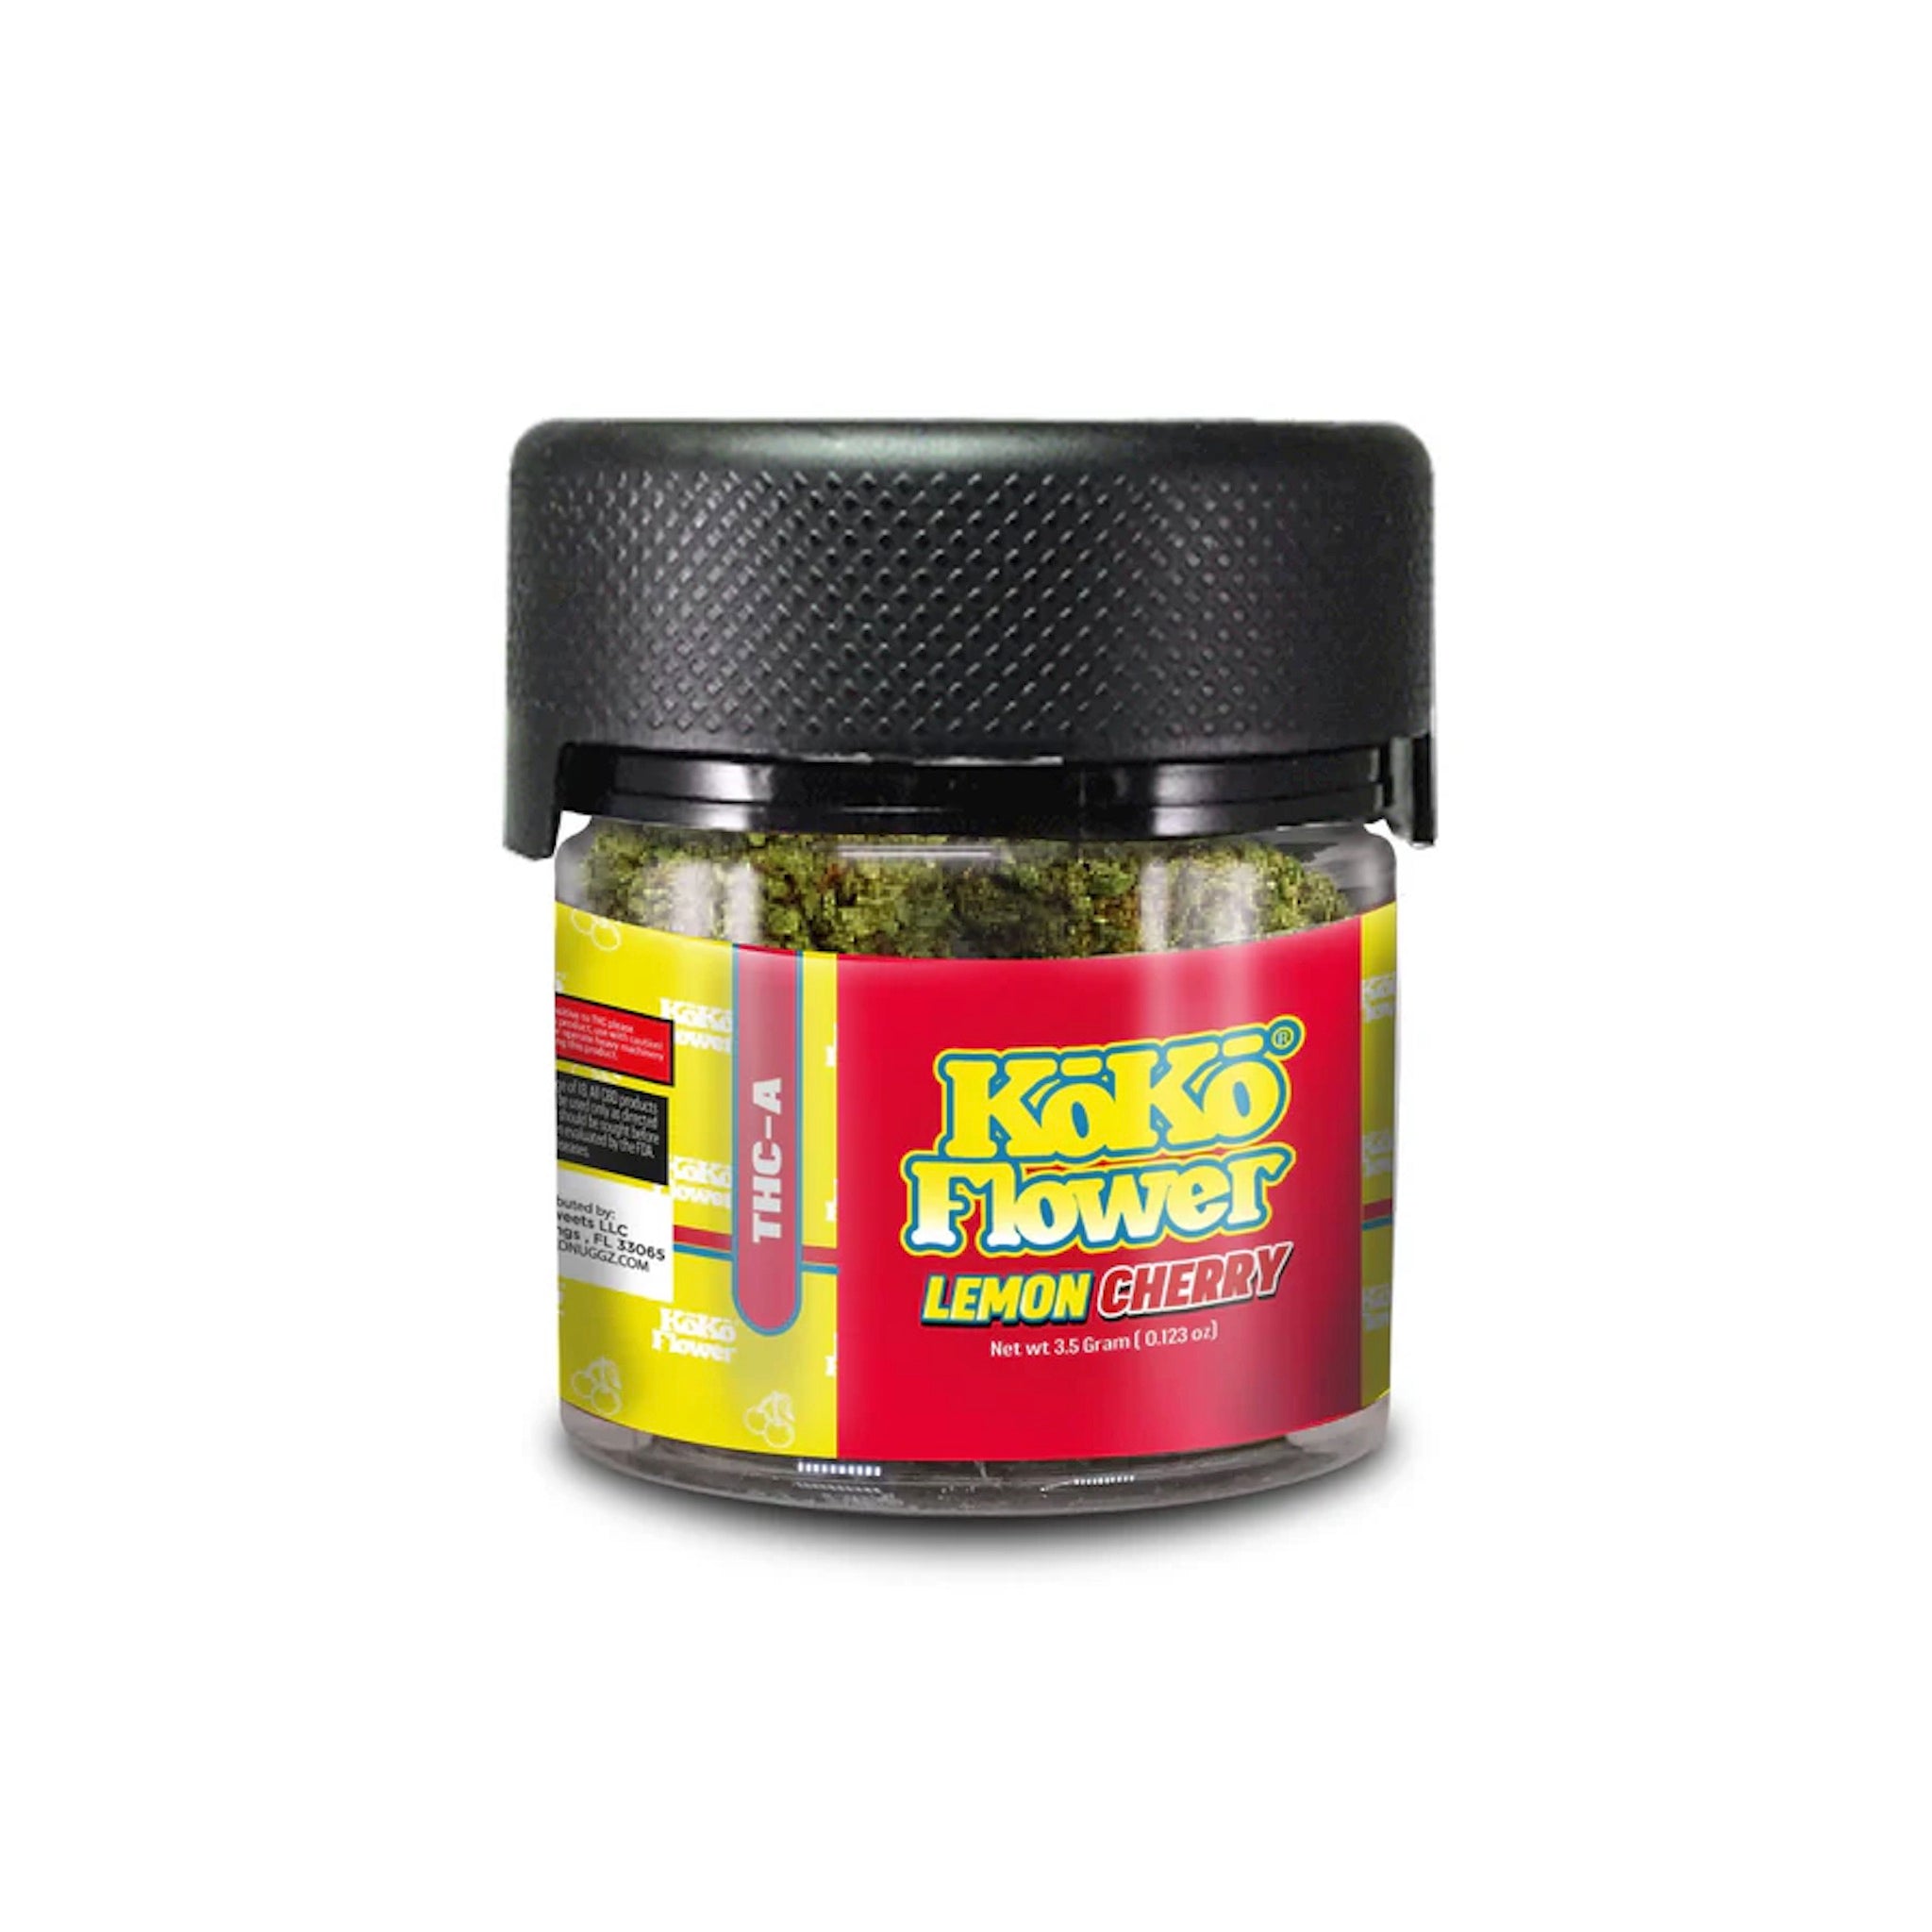 Koko Nuggz Lemon Cherry THC-A Flower - 3.5g - Everything 420